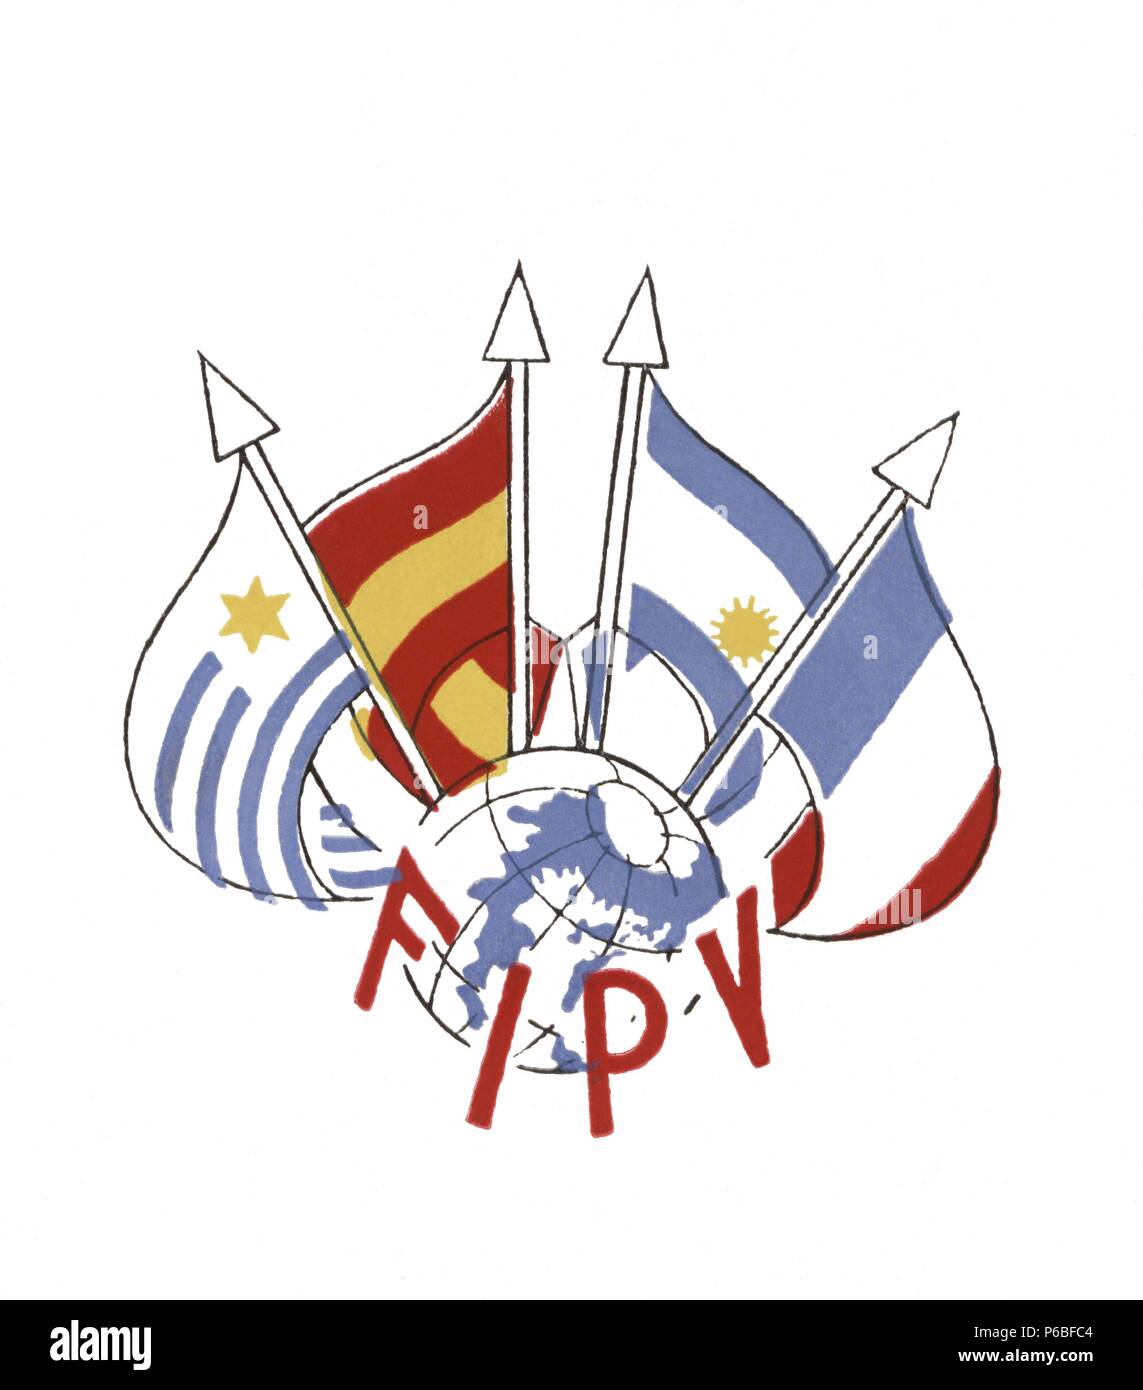 Emblema de la Federación Internacional de Pelota Vasca. 1949 Stock Photo -  Alamy